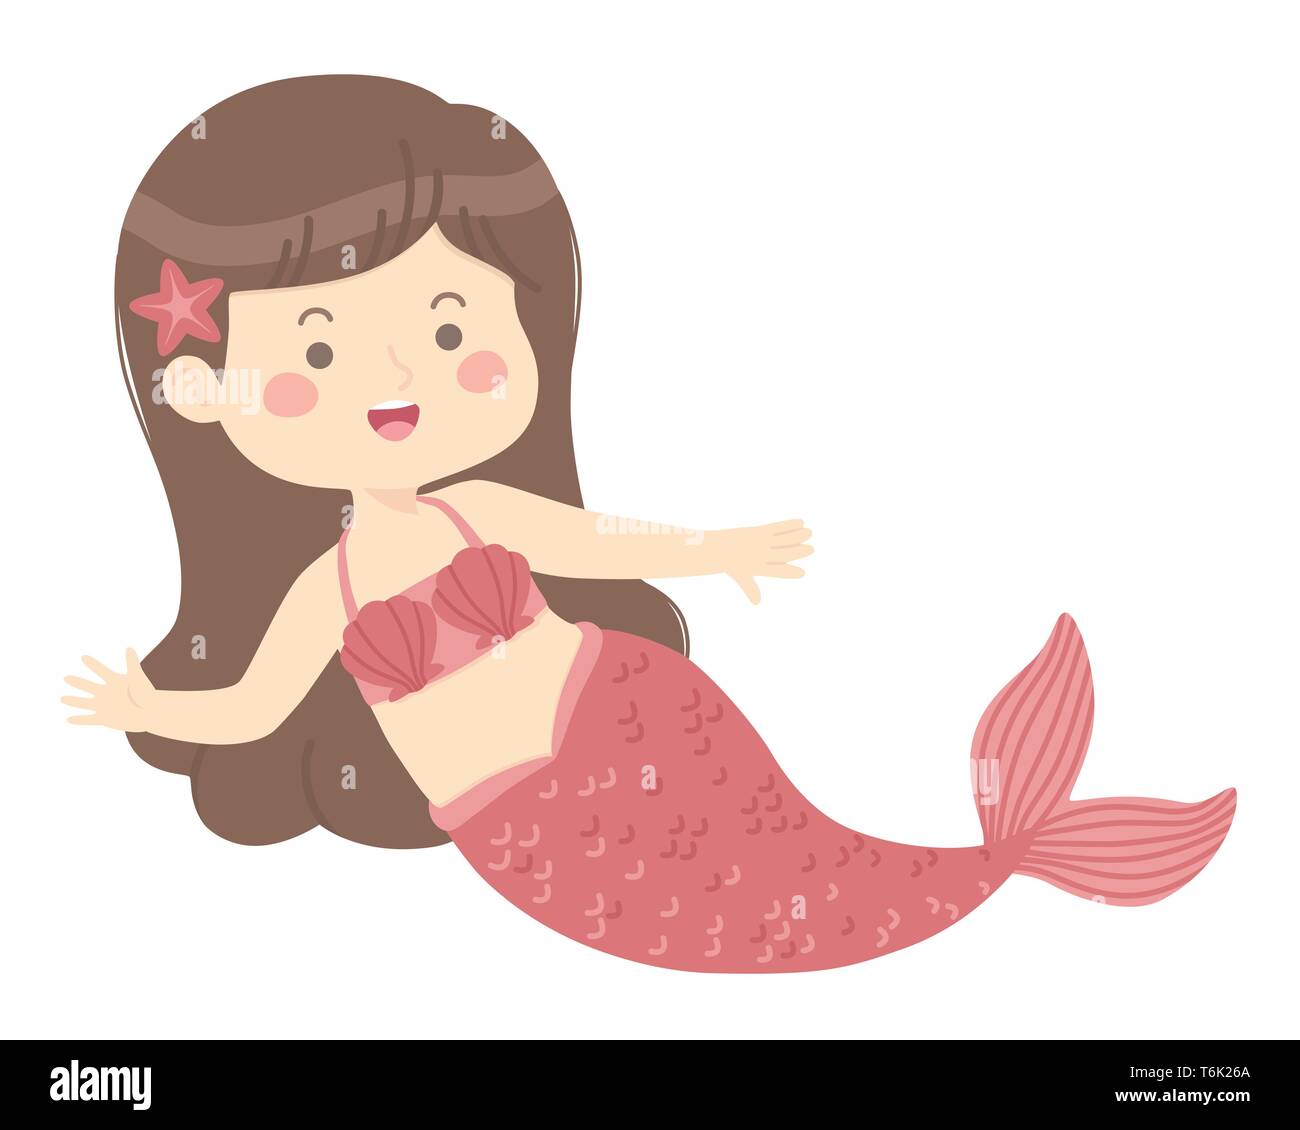 Süße Meerjungfrau Girl rot Vector Illustration Cartoon Character Design auf weißem Hintergrund Stock Vektor